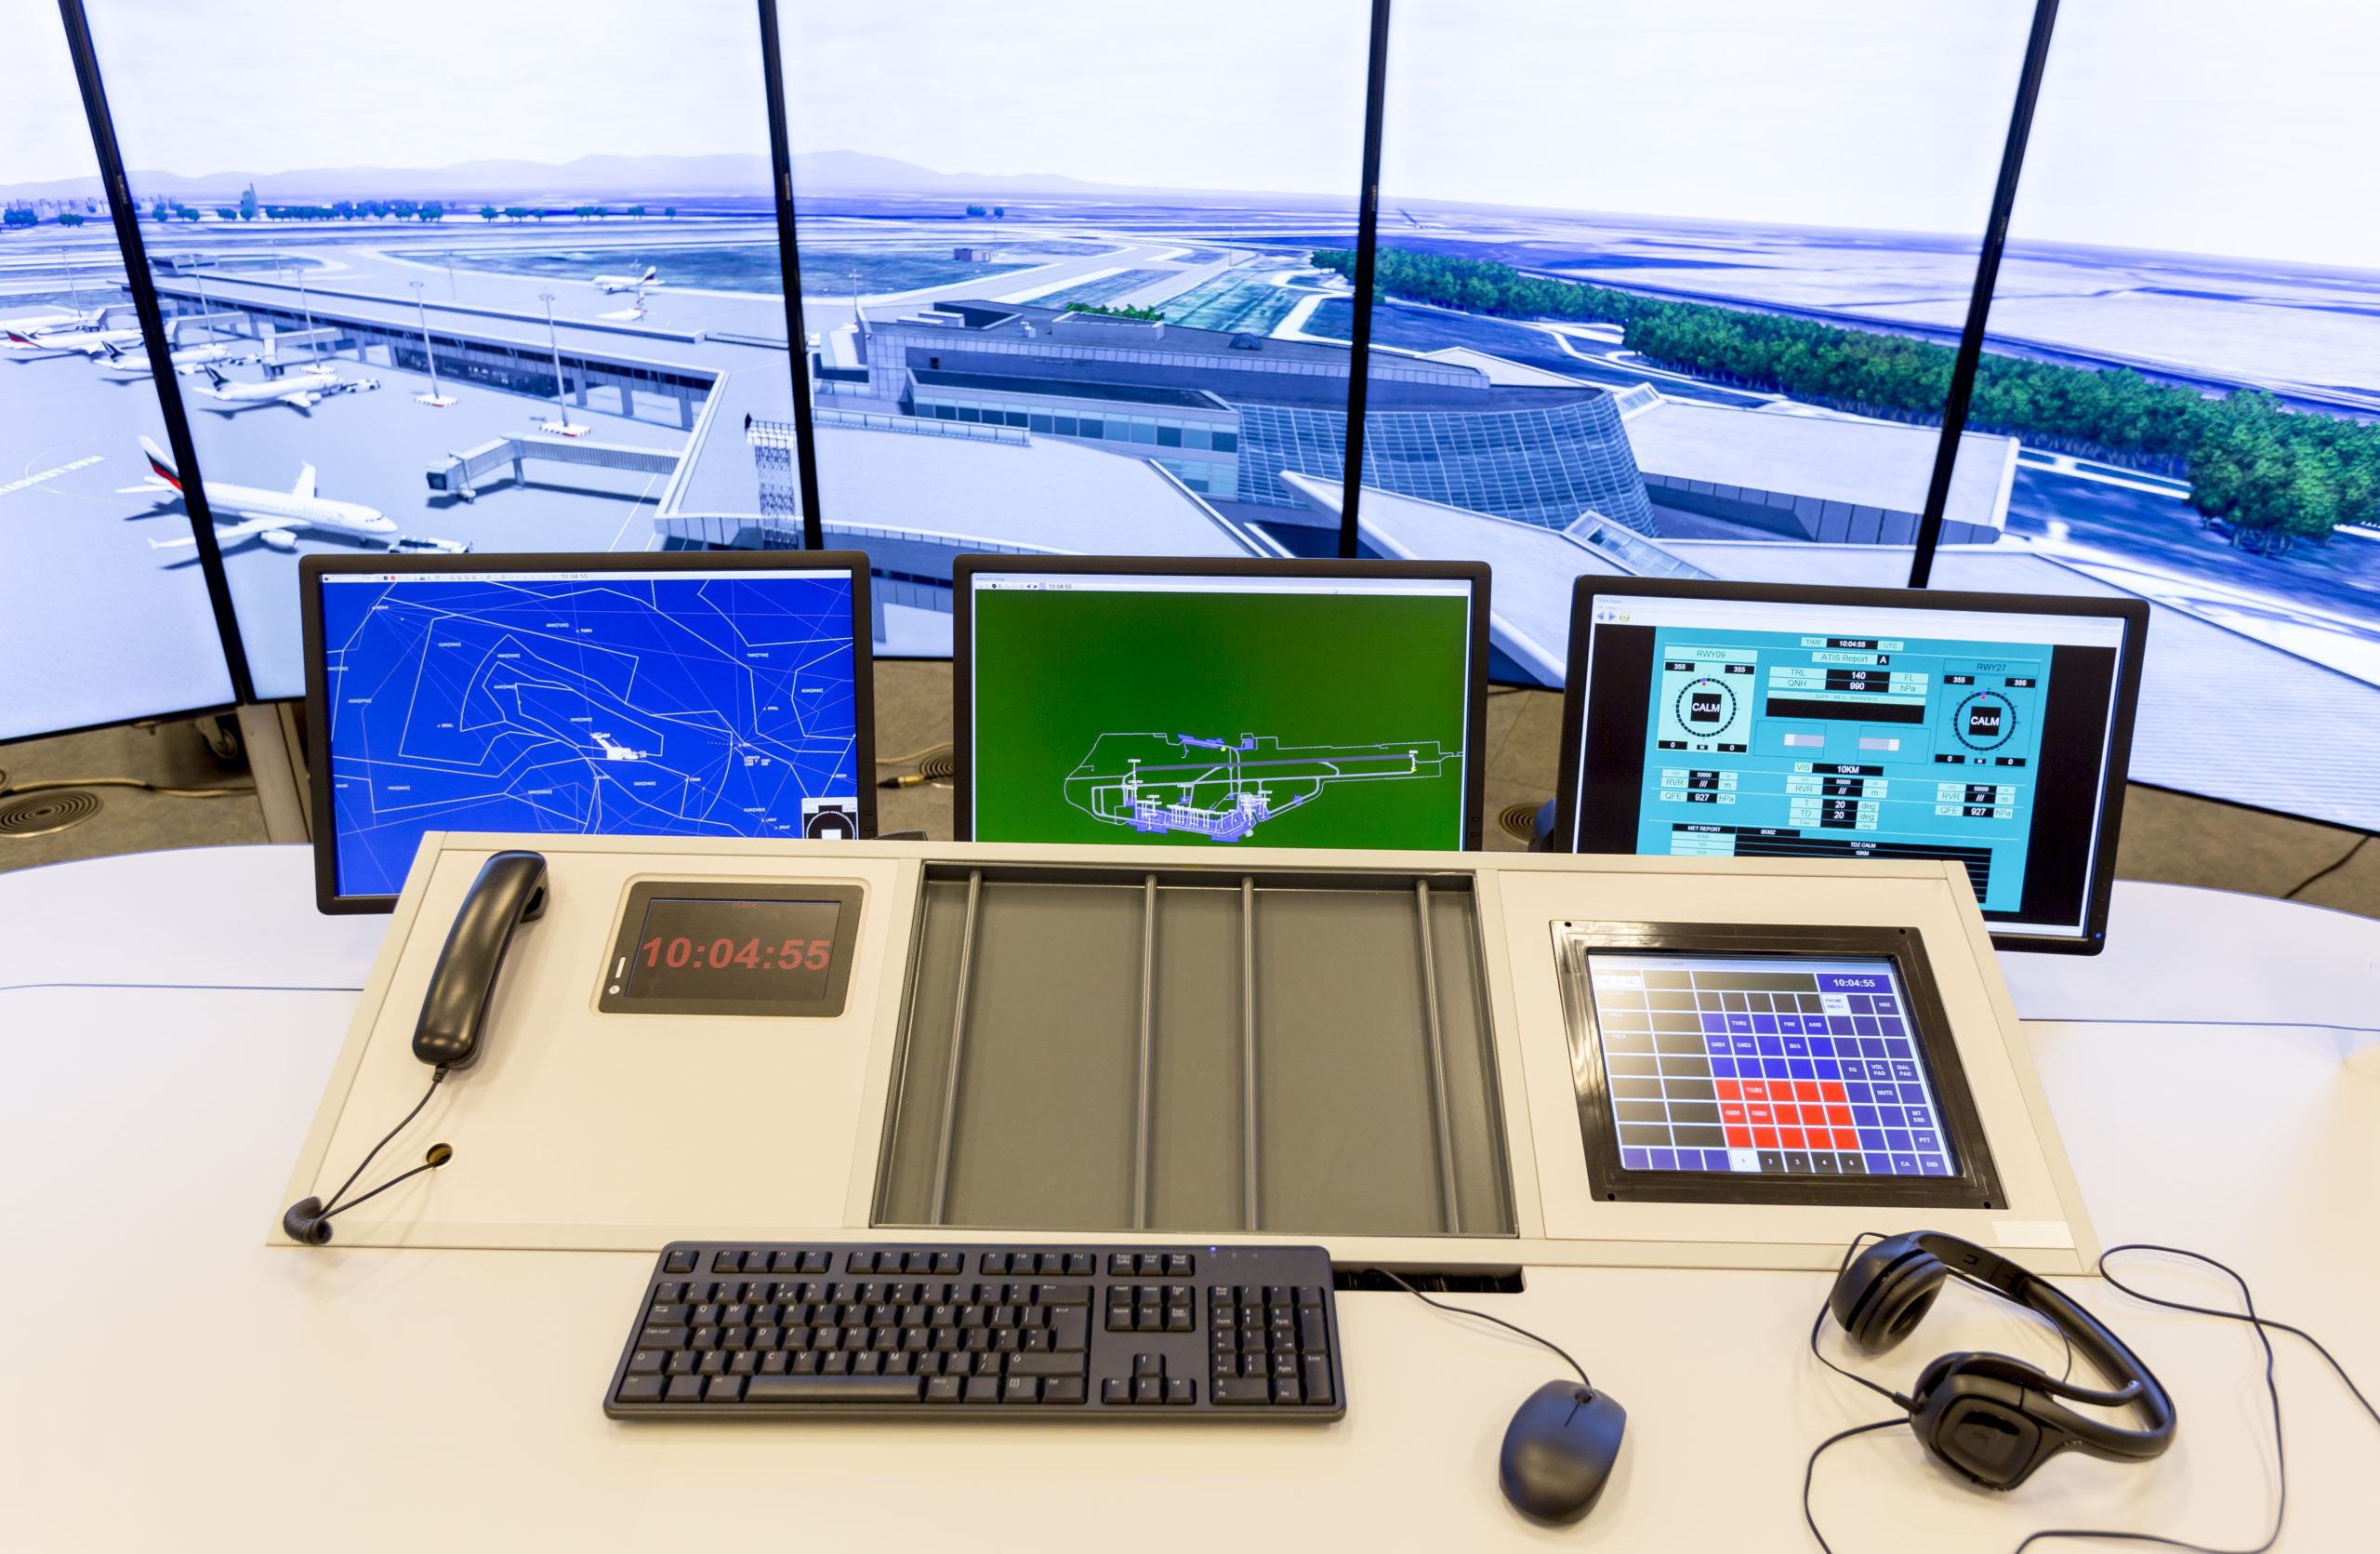 "Bulgarian Air Traffic Services Authority" (BULATSA) control center.